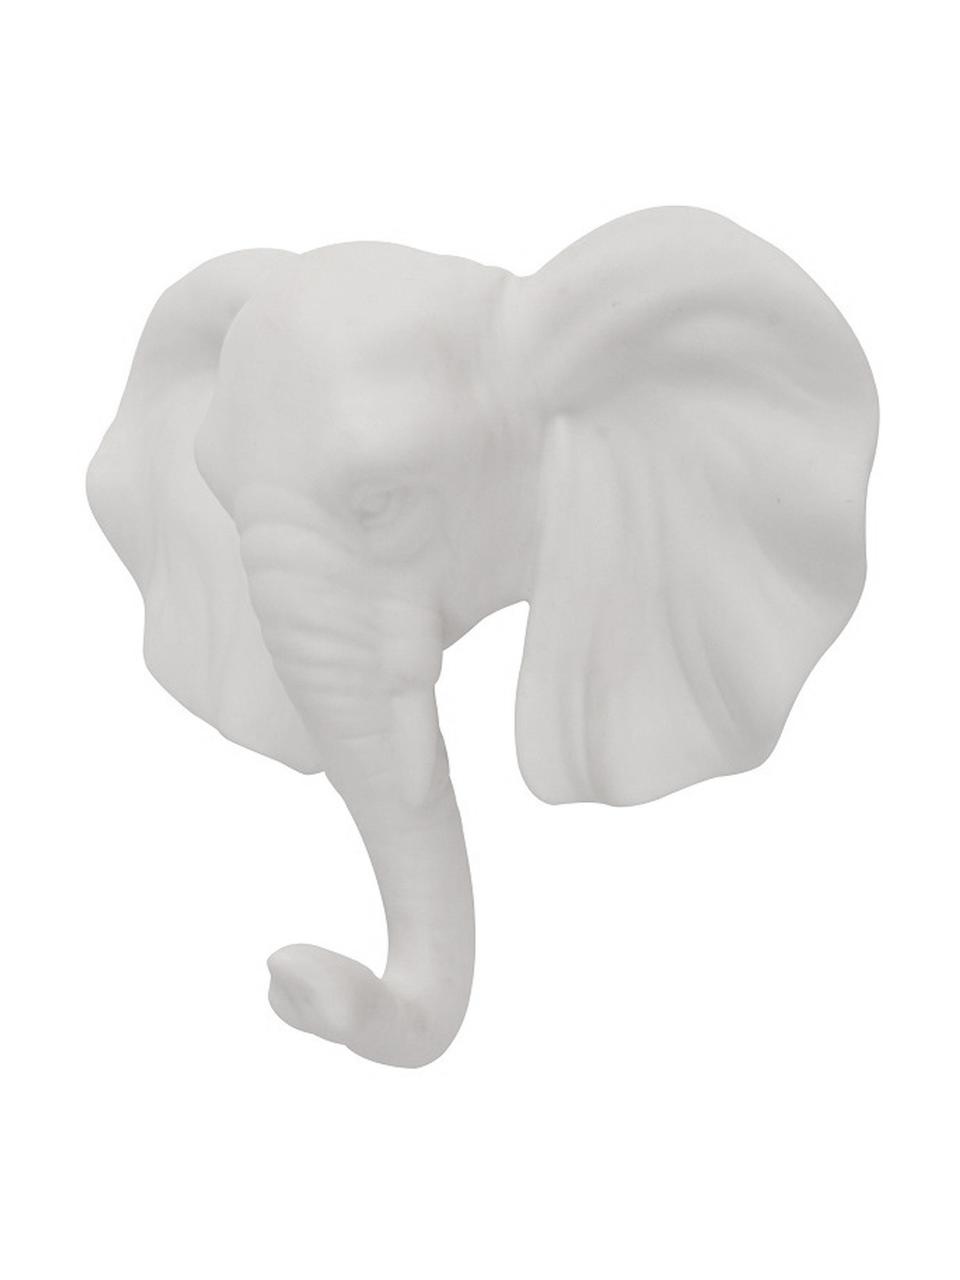 Wandhaken Elephant aus Porzellan, Porzellan, Weiß, H 14 cm